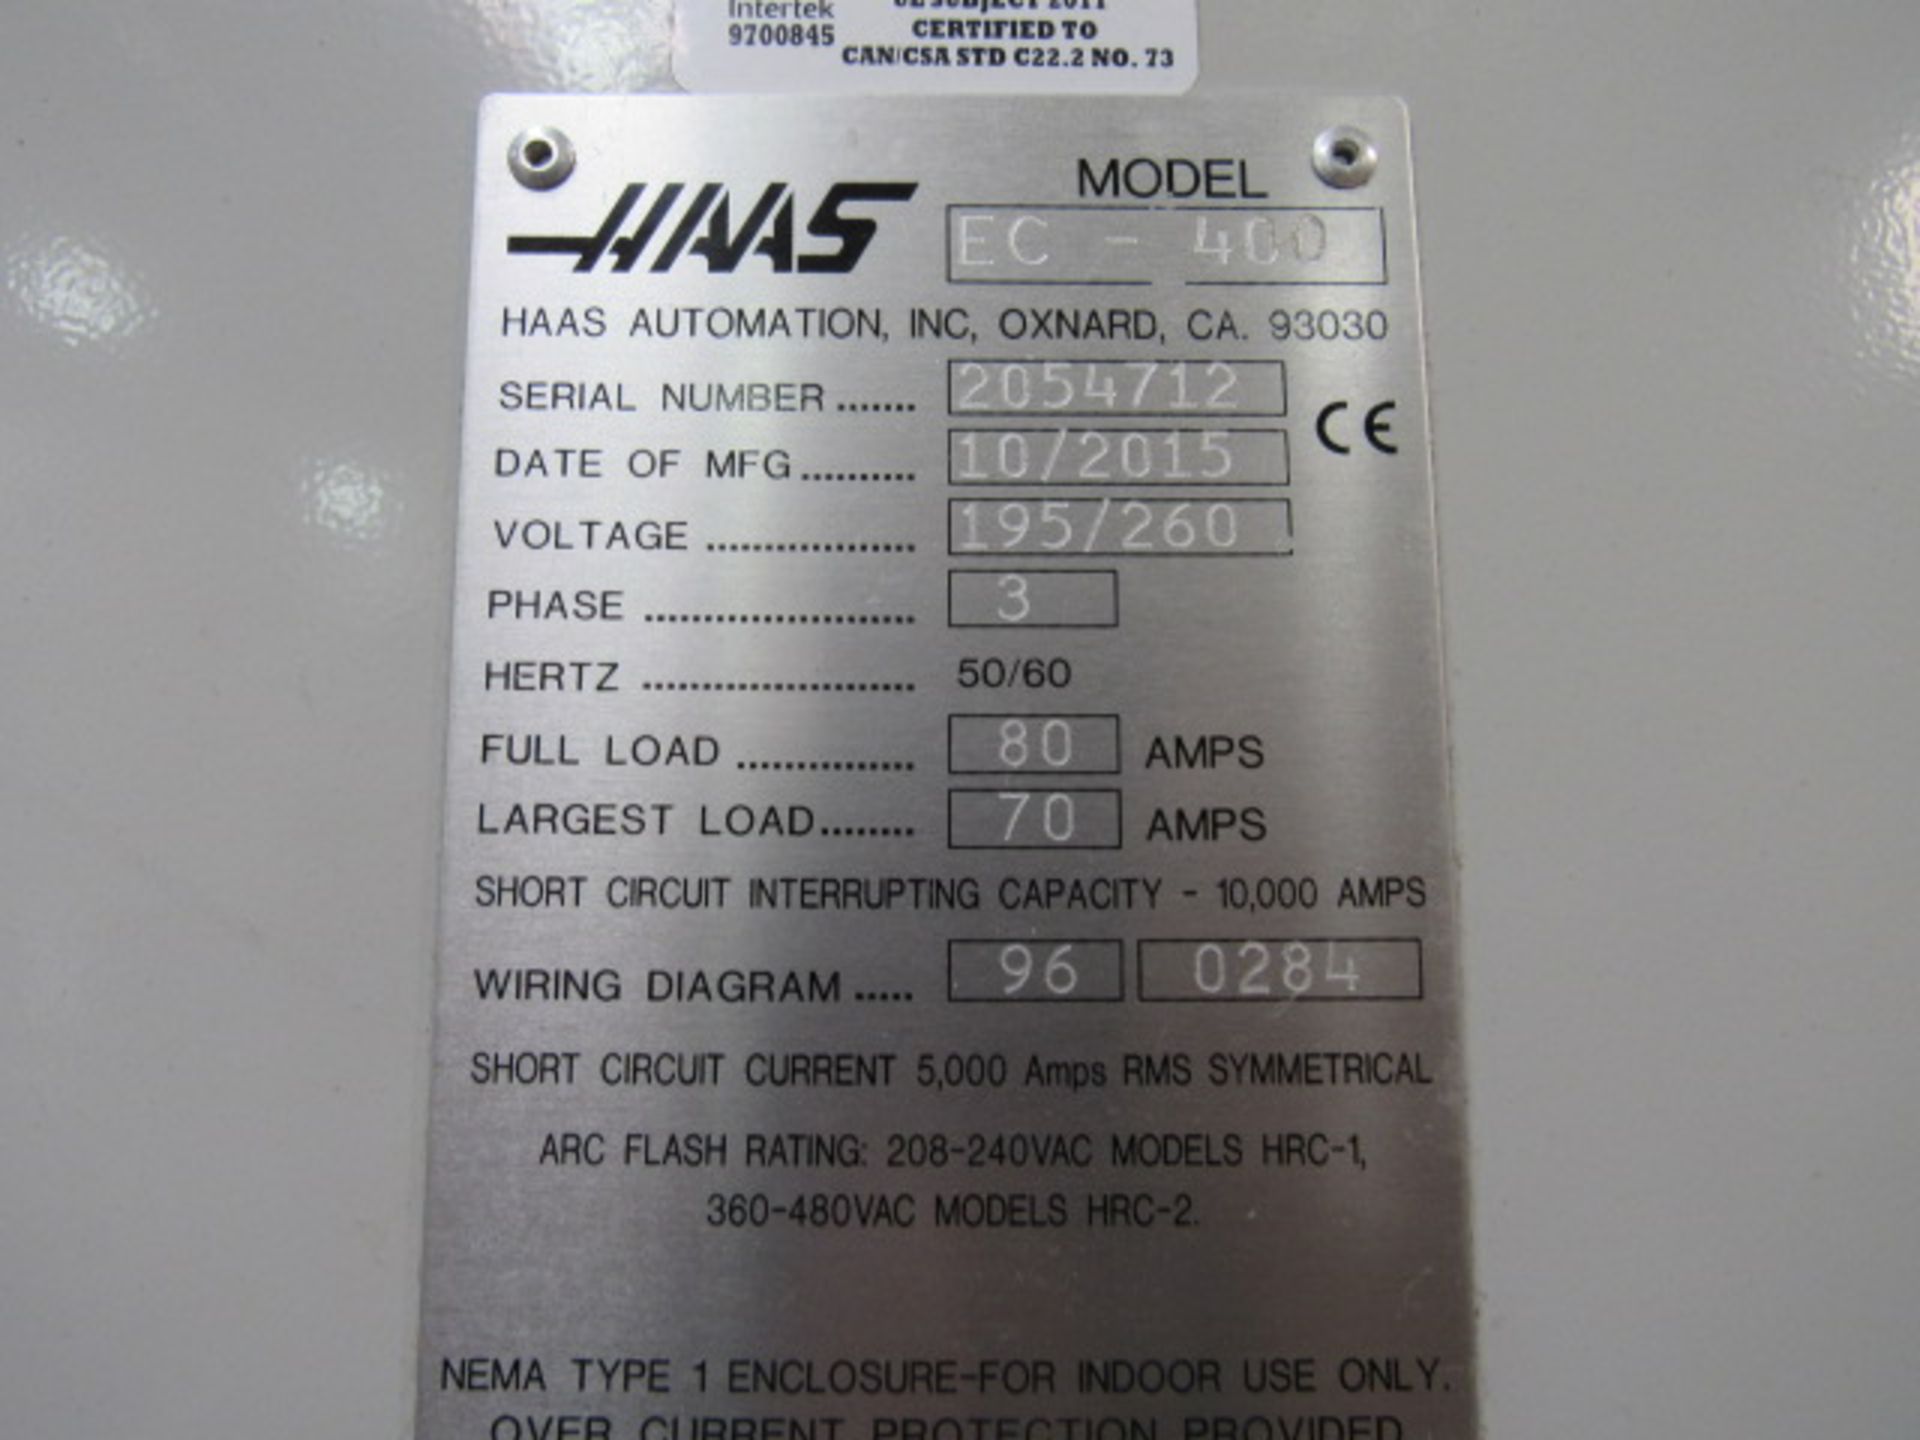 Haas EC400 4 Axis CNC Horizontal Machining Center - Image 12 of 12